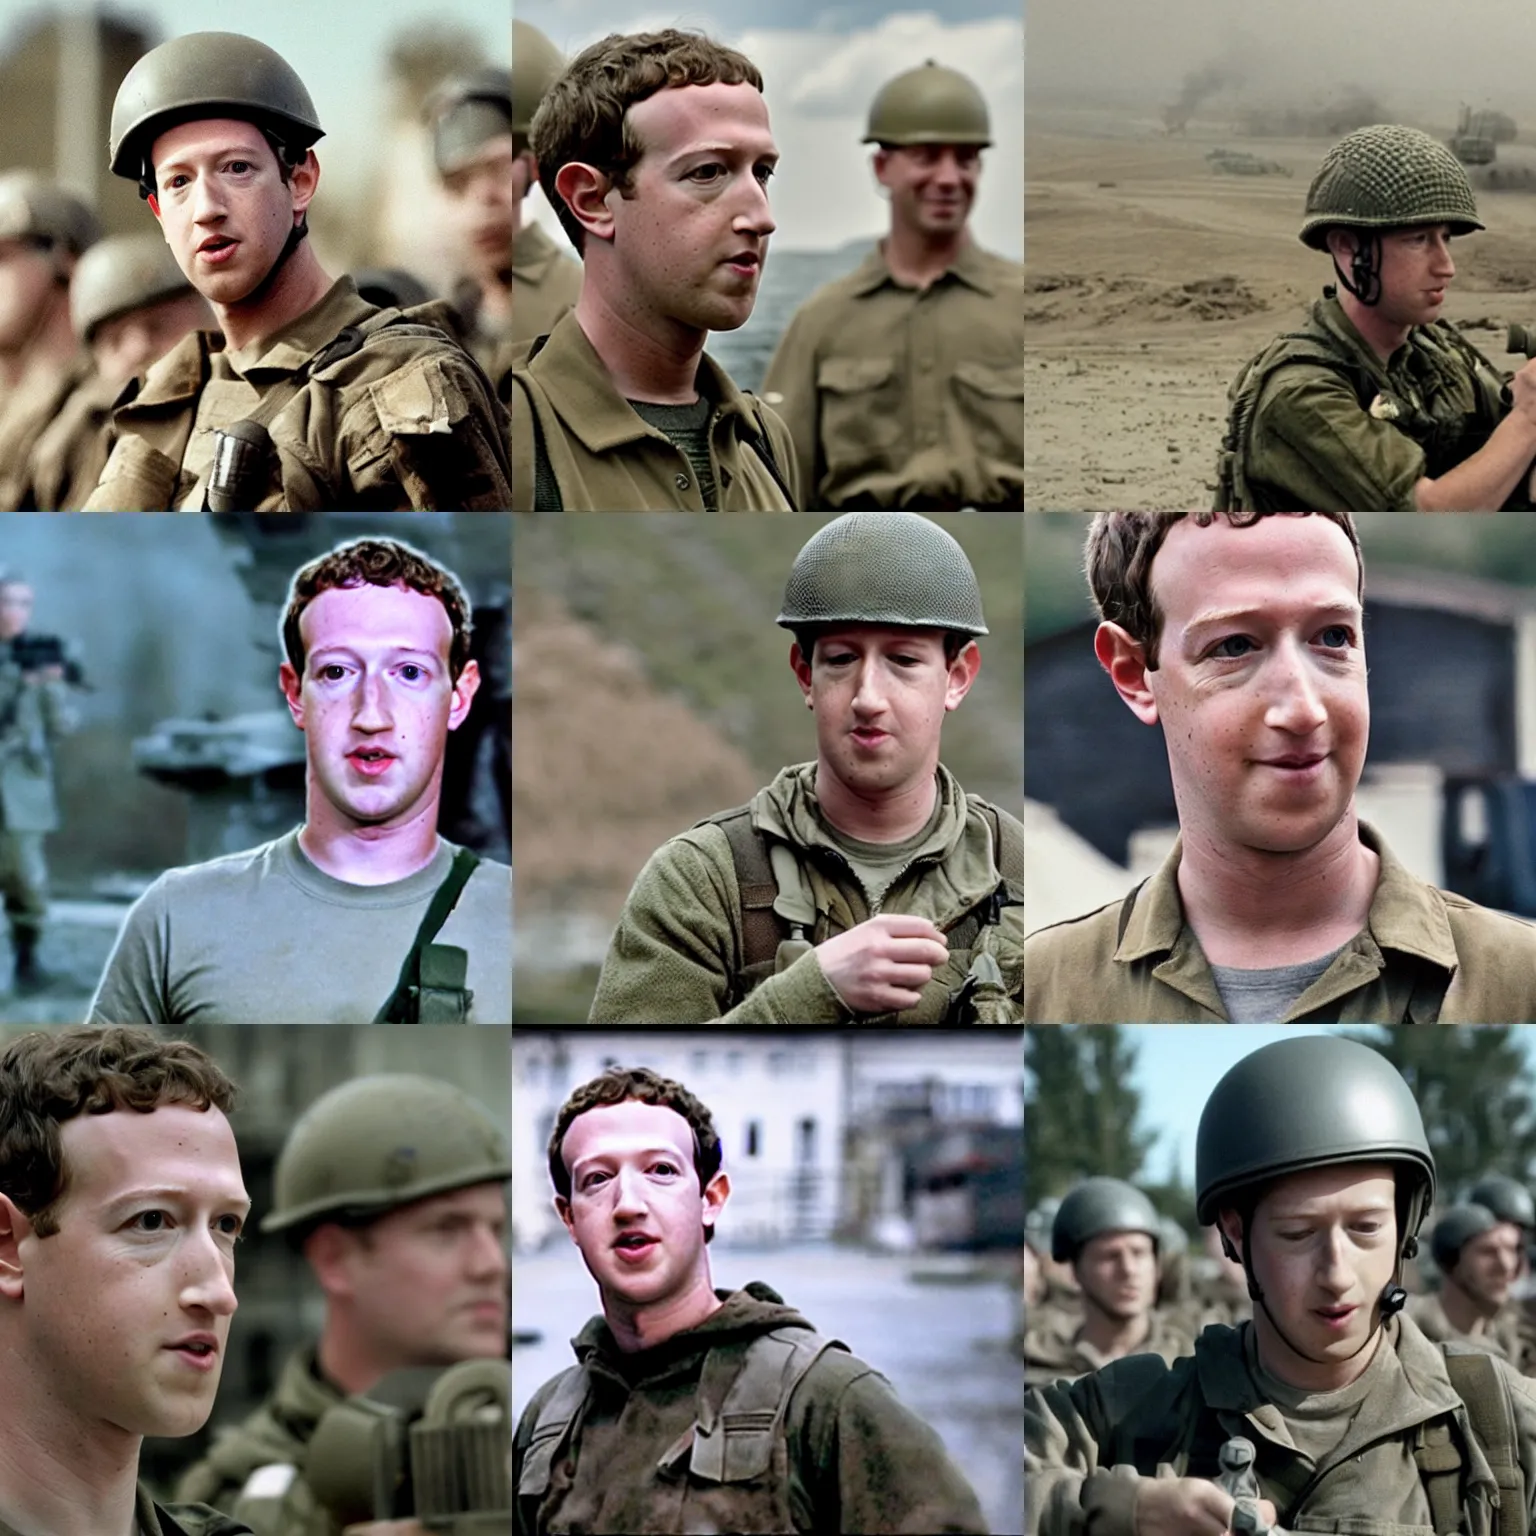 Prompt: Movie still of Mark Zuckerberg in Saving Private Ryan